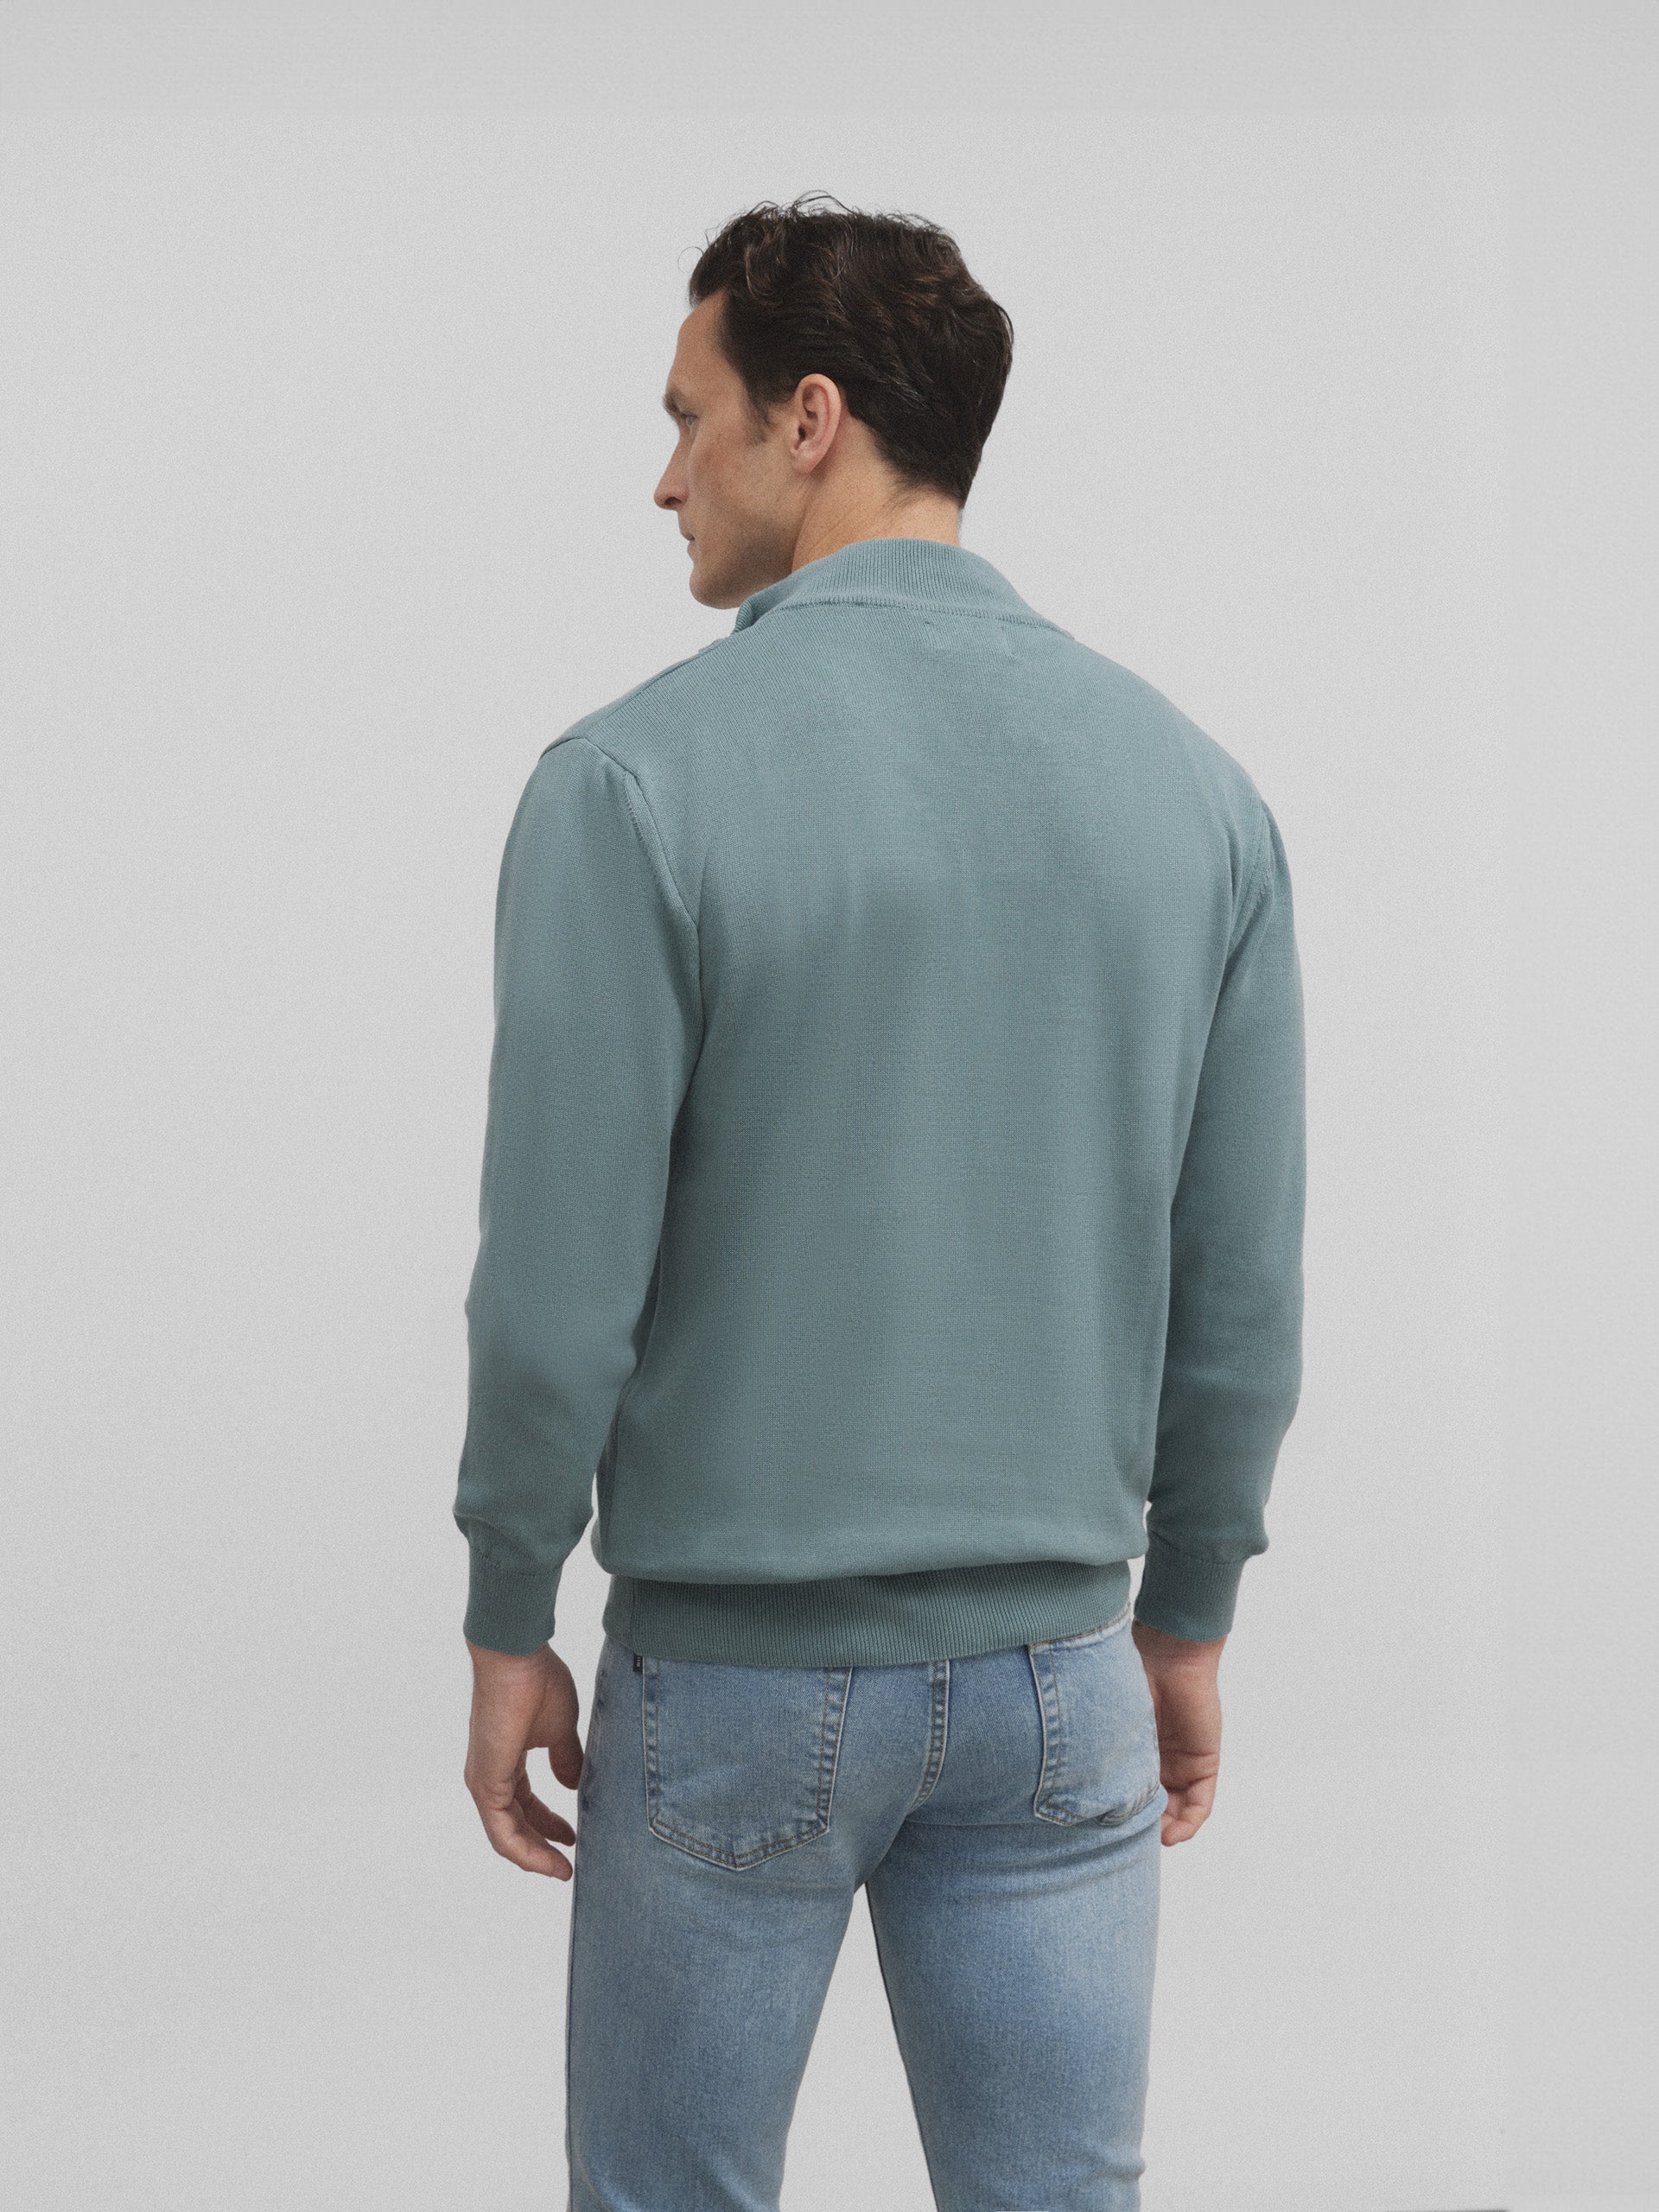 Petrol half-zip sweater